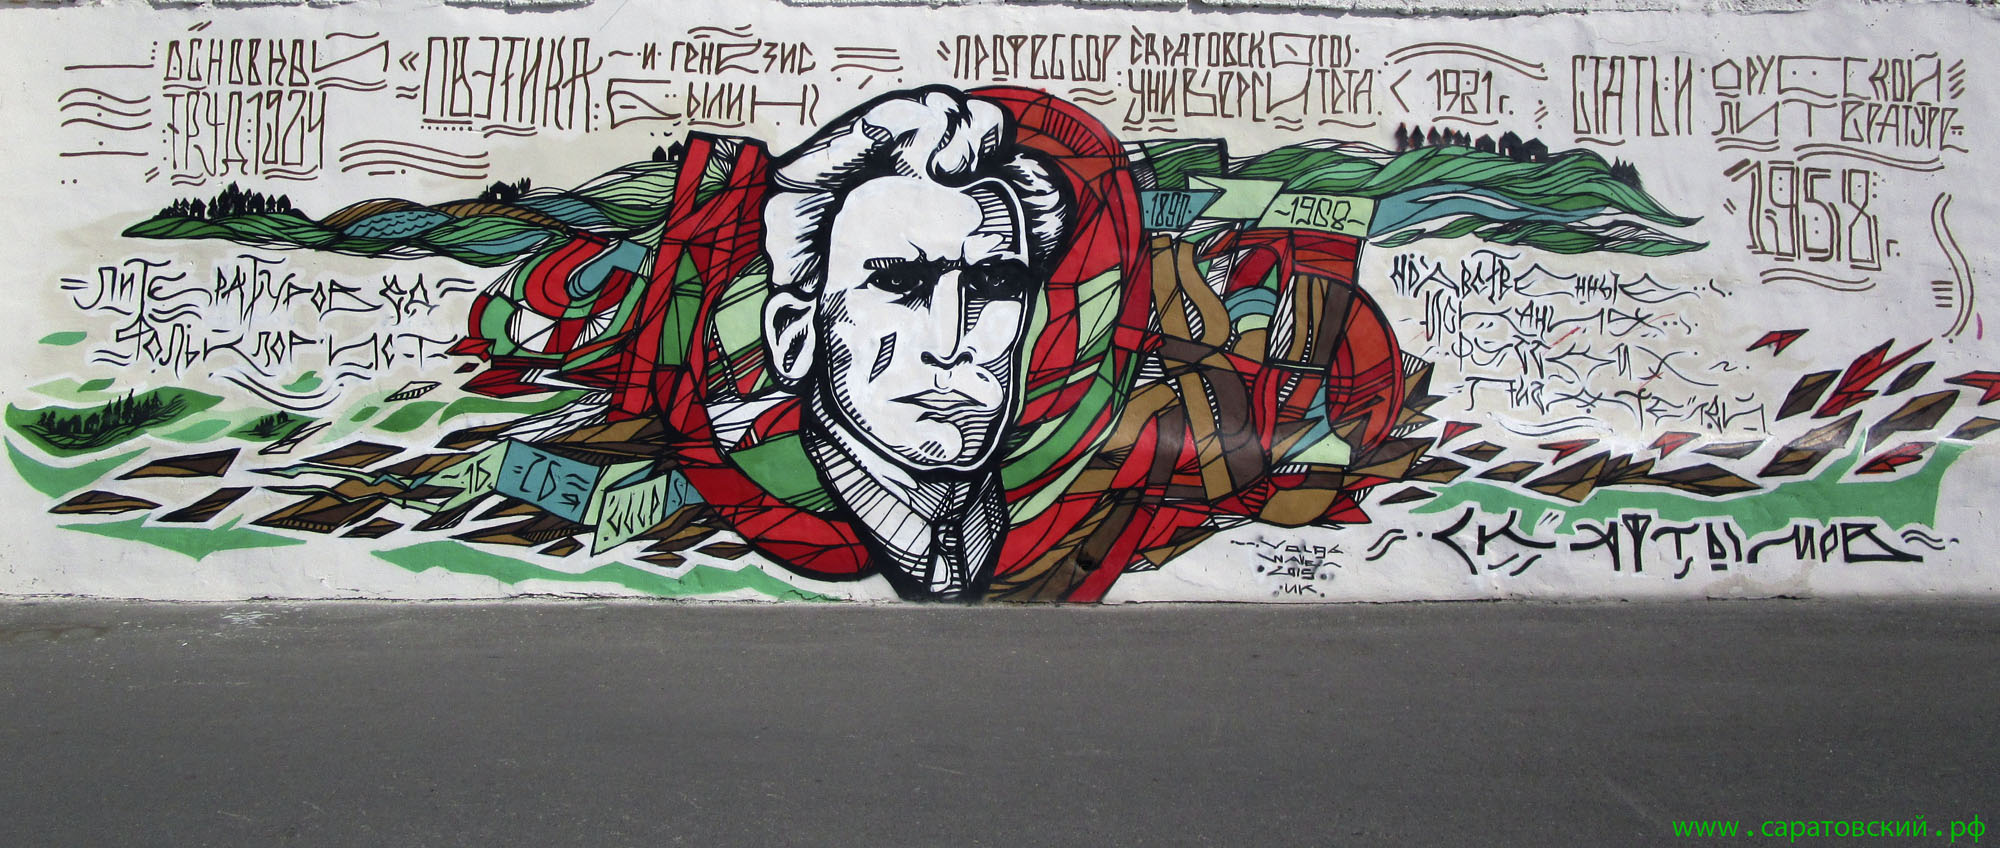 Saratov quayside graffiti: Alexander Skaftymov and Saratov, Russia